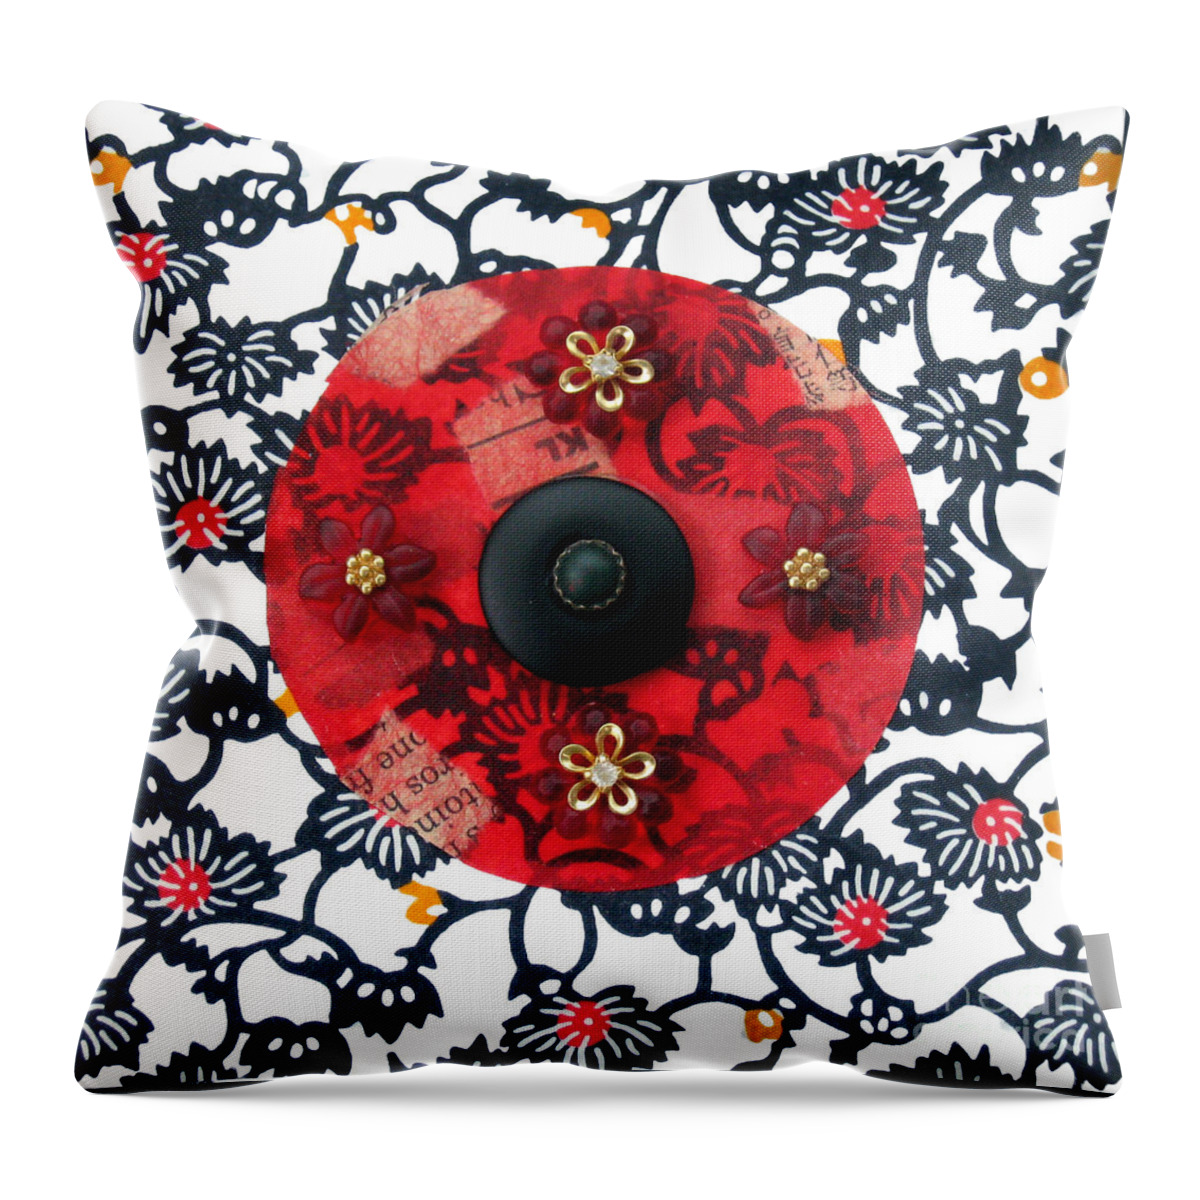 Mixed Media. Collage Throw Pillow featuring the mixed media Ruby Flower Mandala by Ellen Miffitt